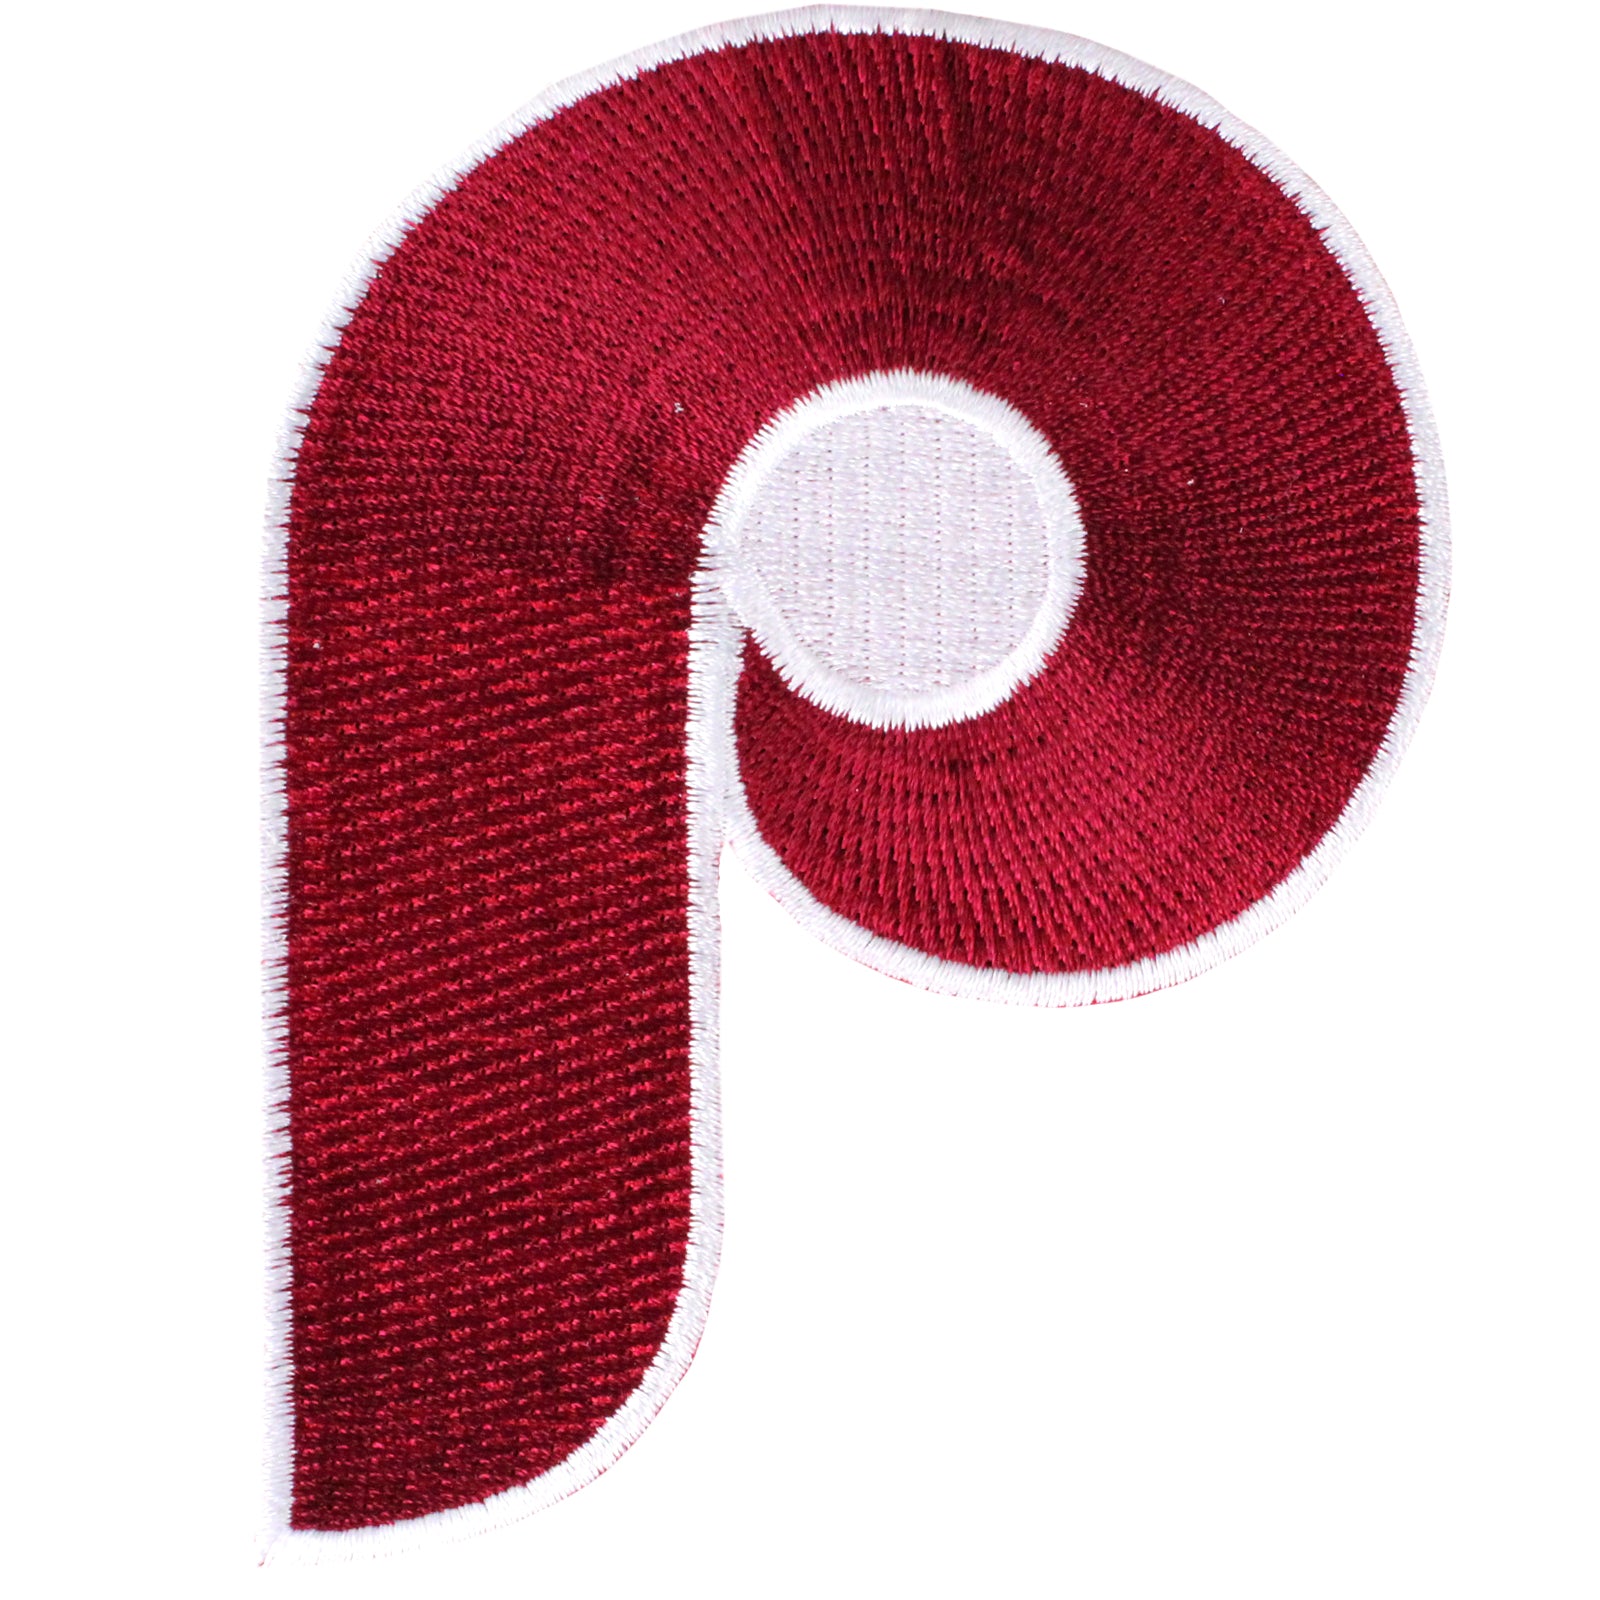 Philadelphia Phillies 'P' Wordmark Team Logo Patch (1973-1986) 